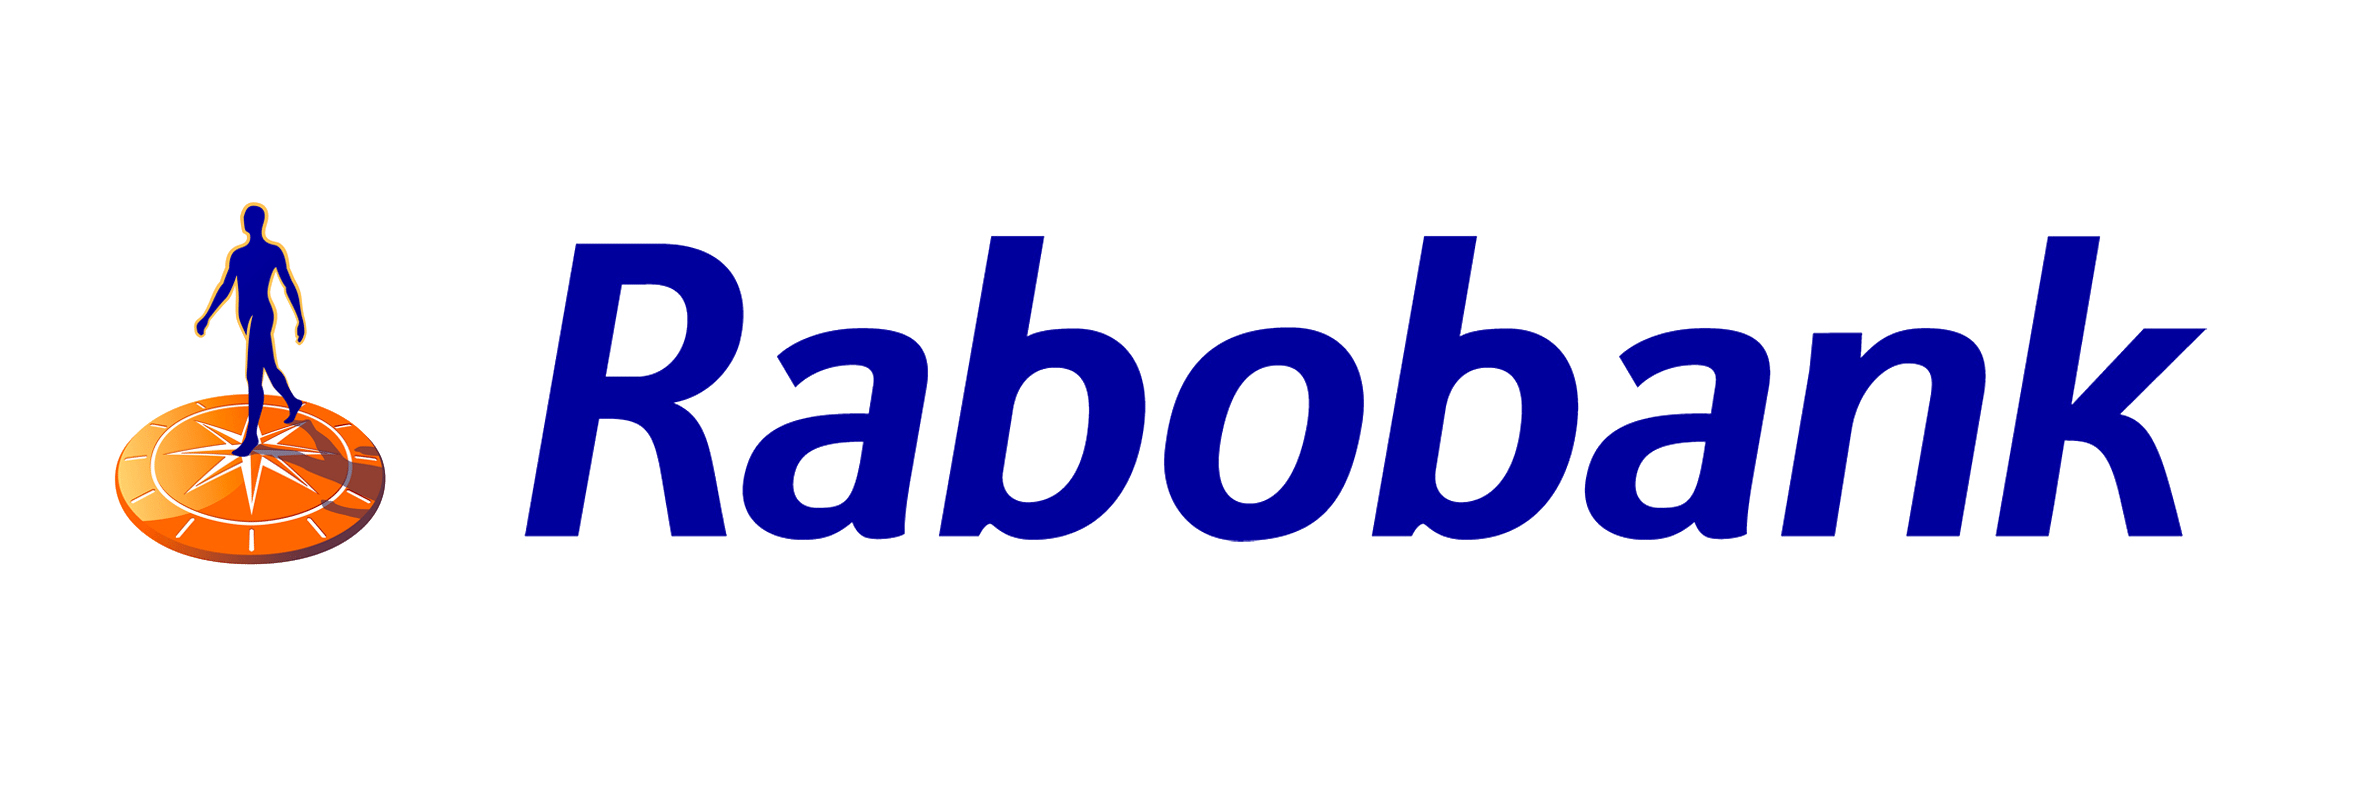 Rabobank - Dutch Cuisine